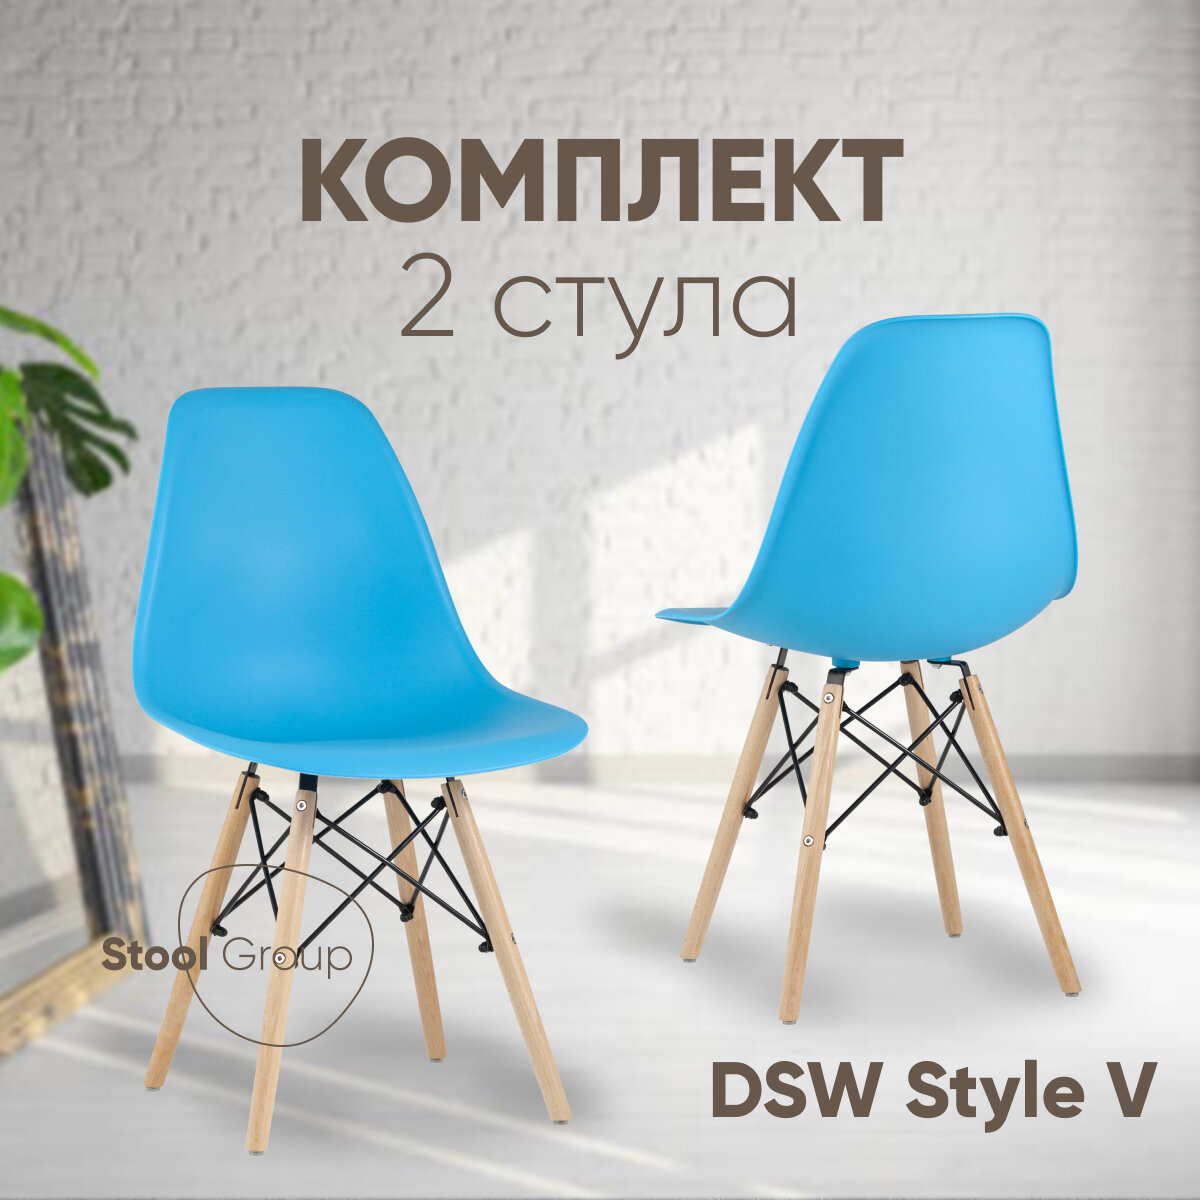 Стул для кухни DSW Style V, бирюзовый (комплект 2 стула)